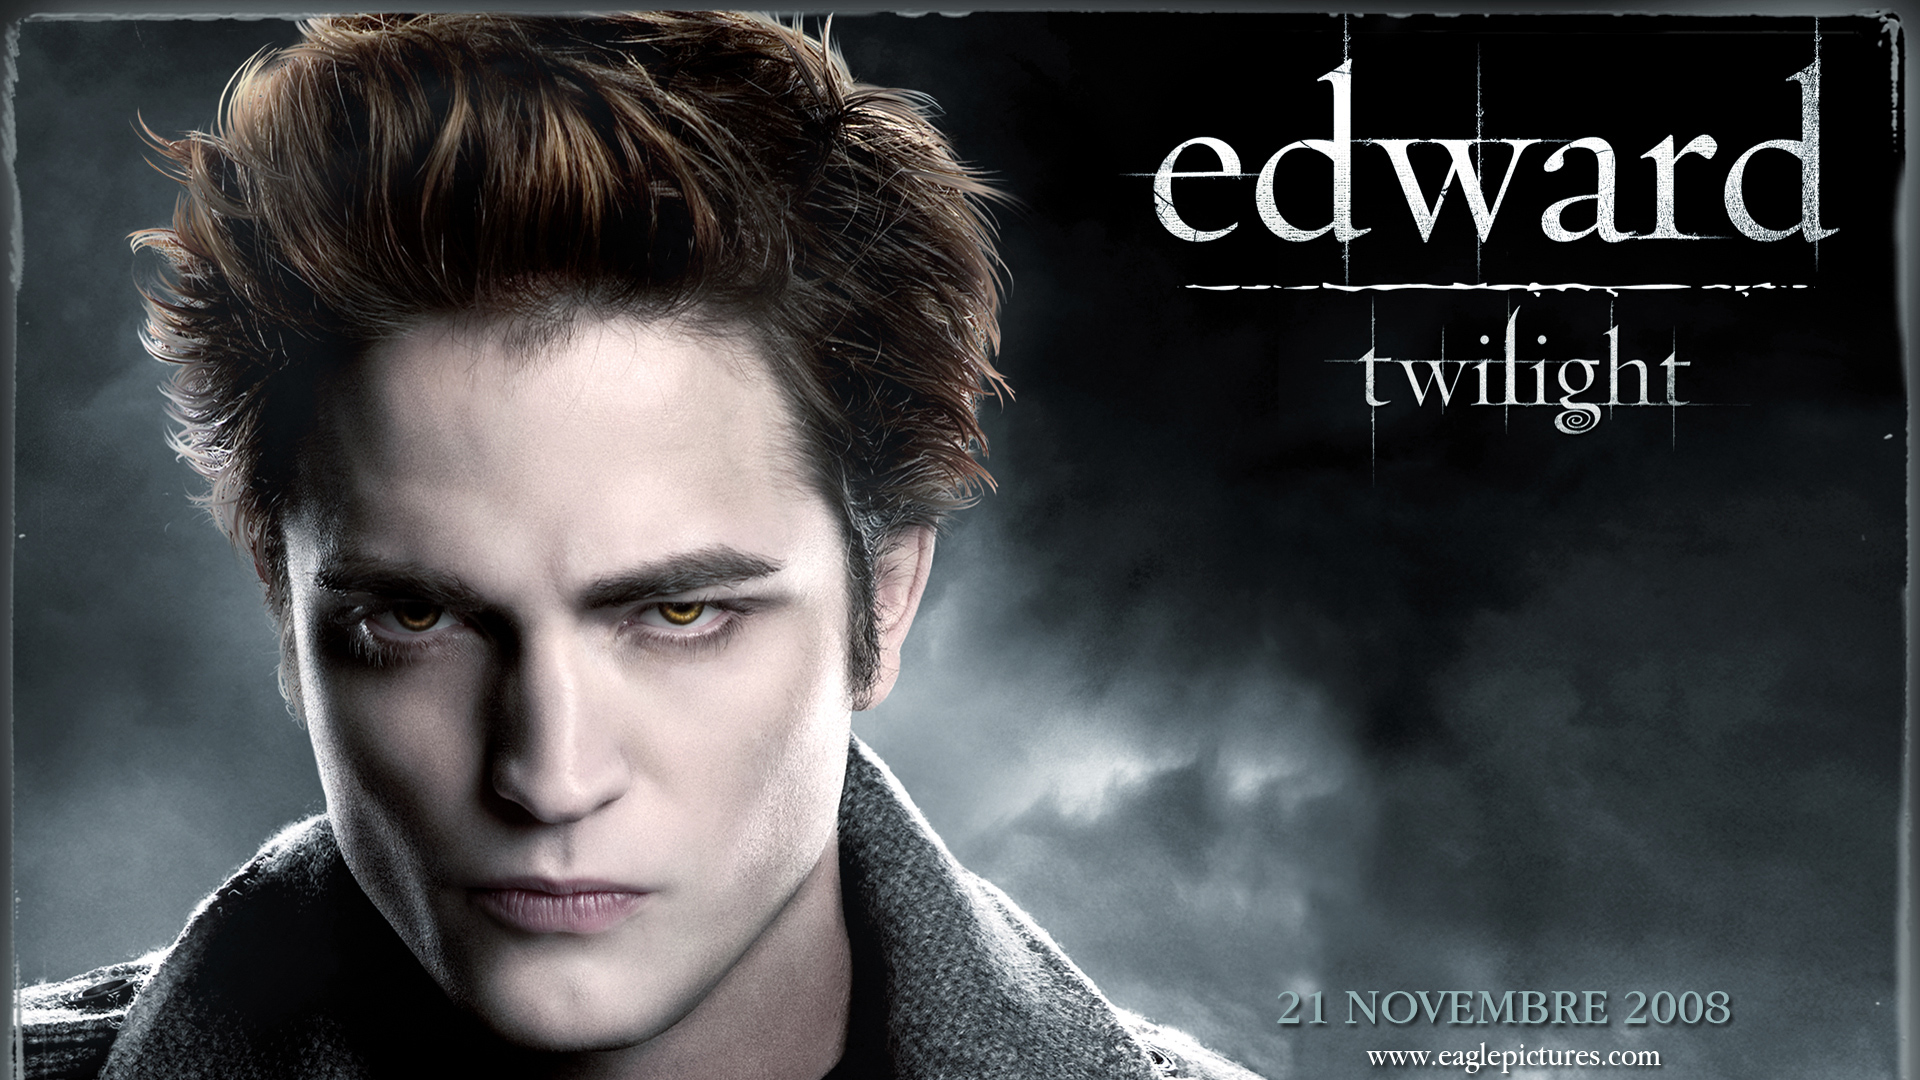 Twilight Saga Edward Cullen 1080p Wallpaper